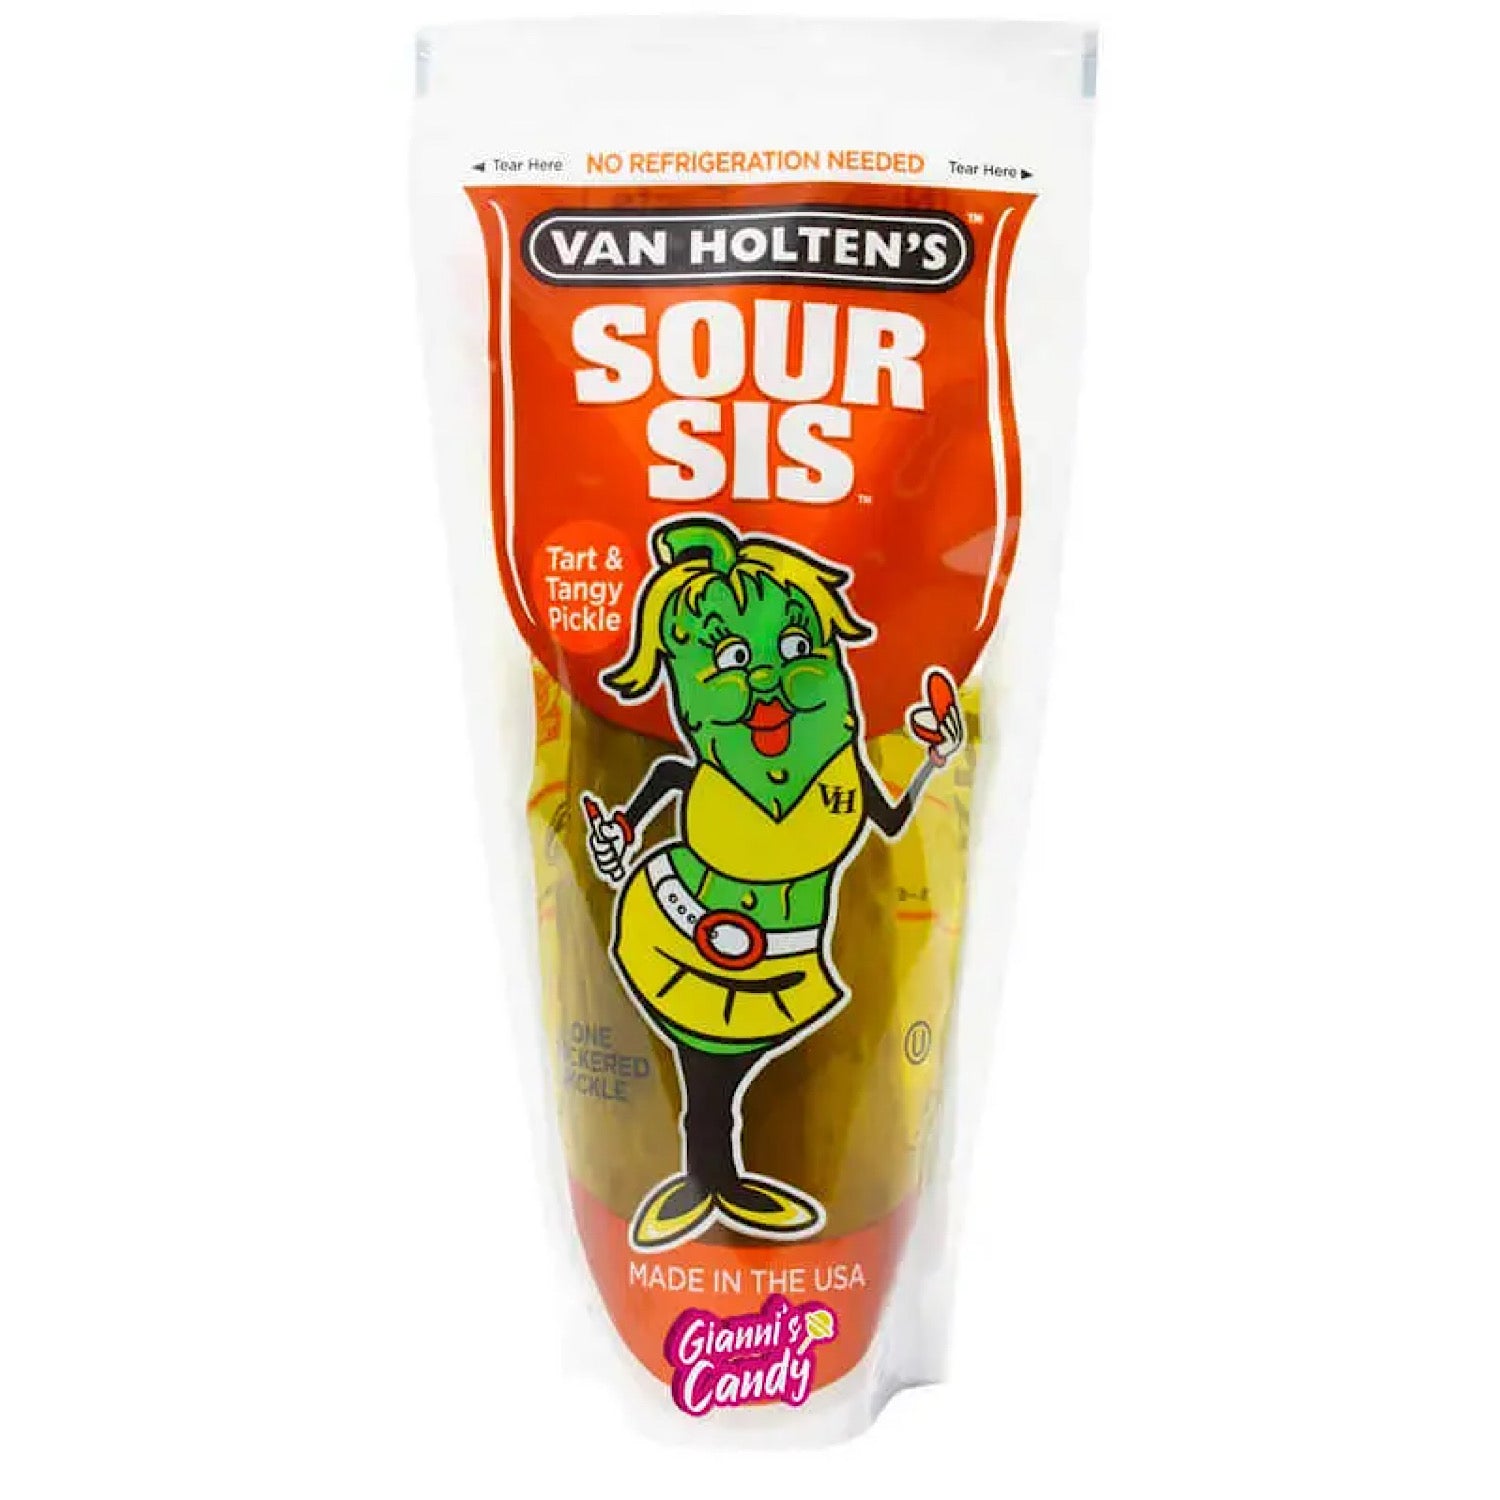 Van holten's sour sis pickle